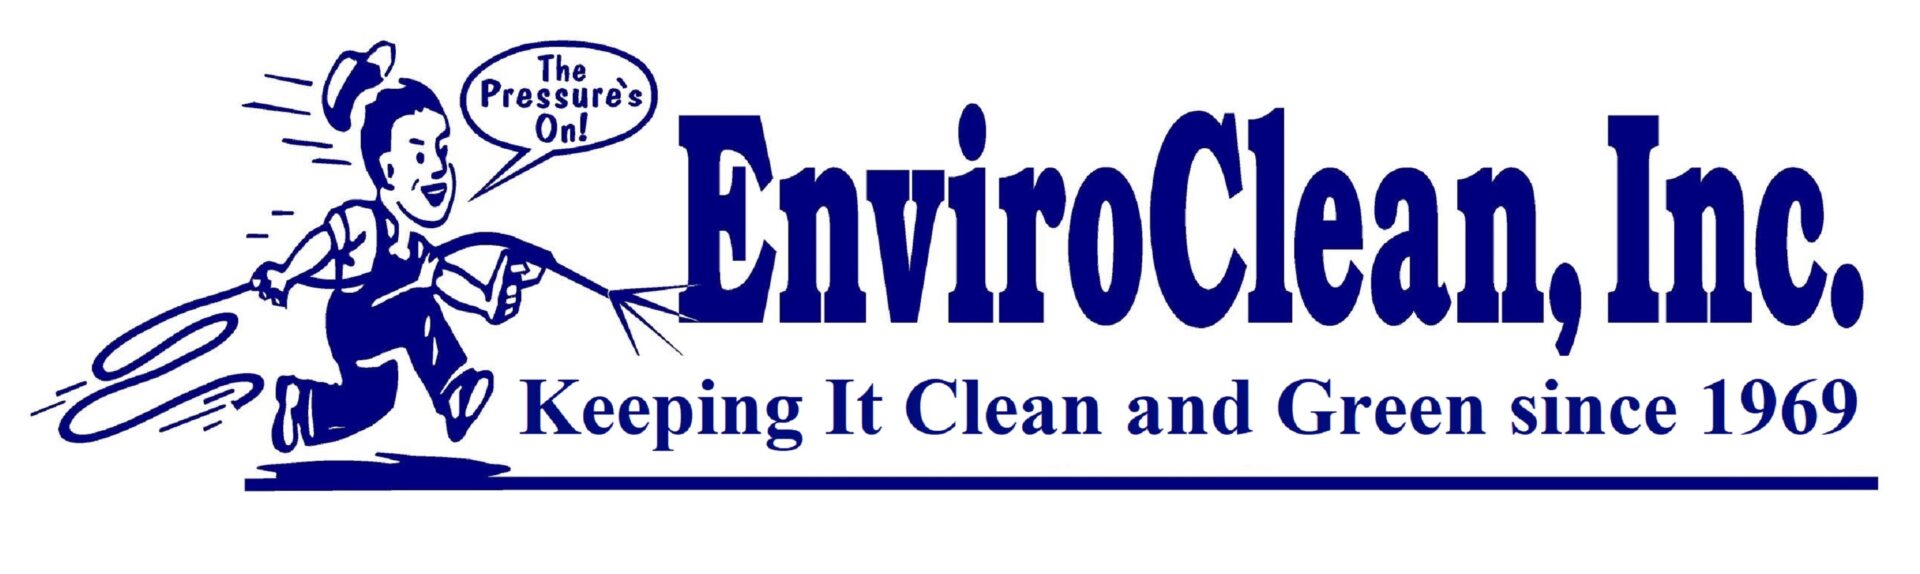 Enviroclean, Inc. logo